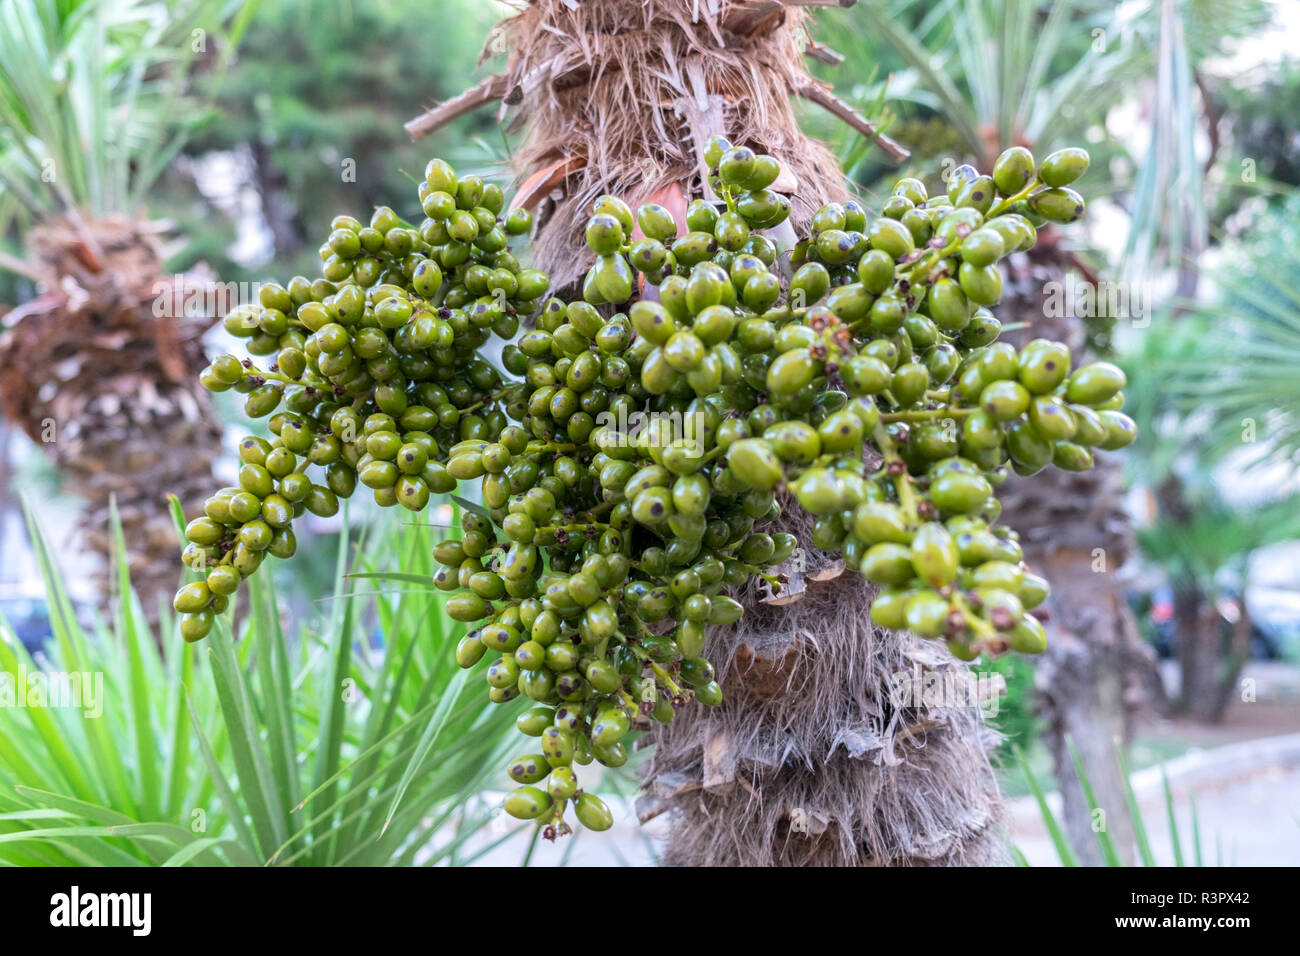 Chinese fan palm, fruit, Bari, Italy, Europe Stock Photo - Alamy